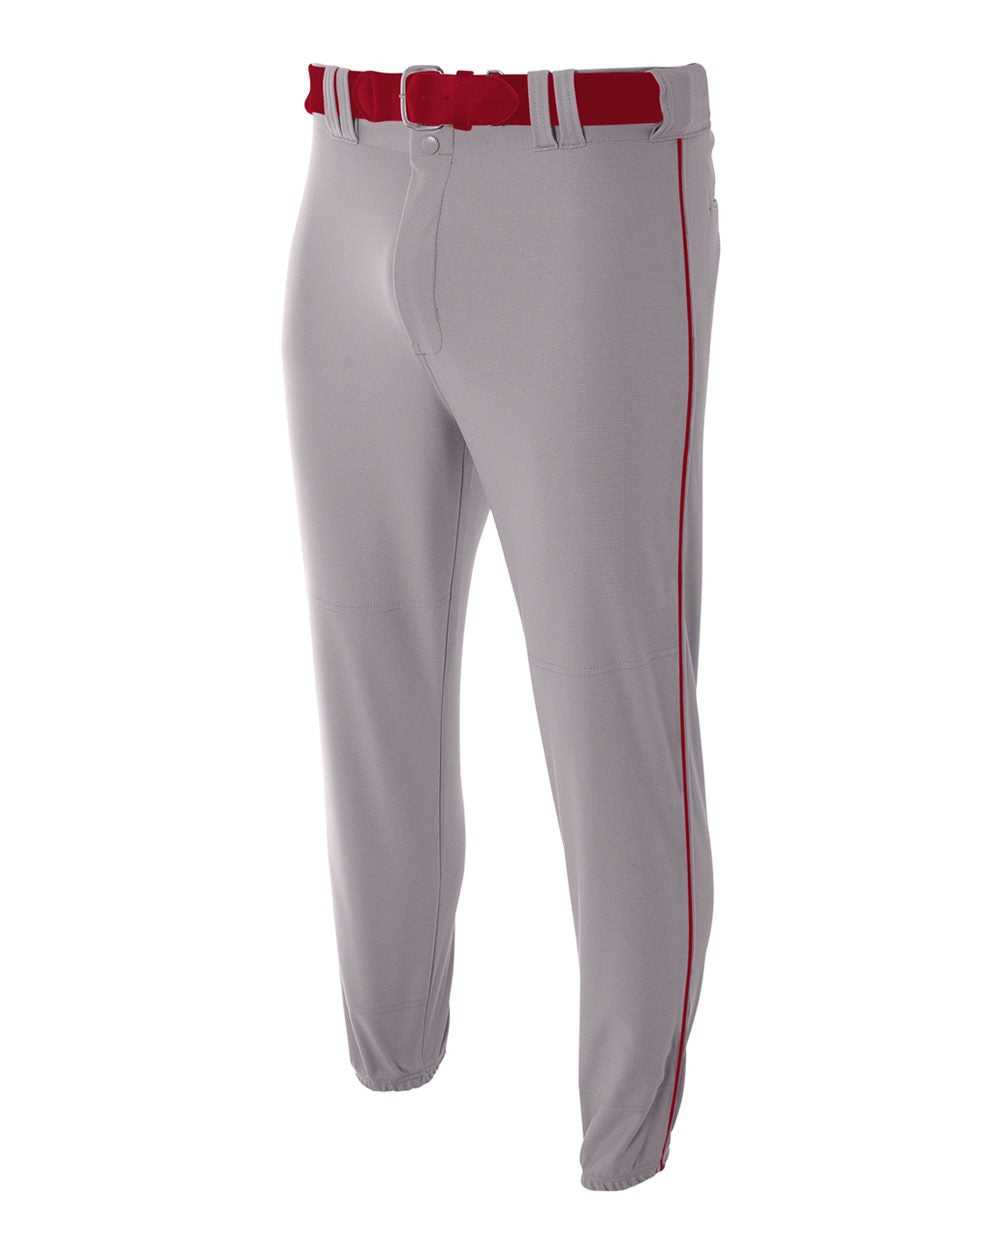 A4 N6178 Pro Style Elastic Bottom Baseball Pant - Gray Cardinal - HIT a Double